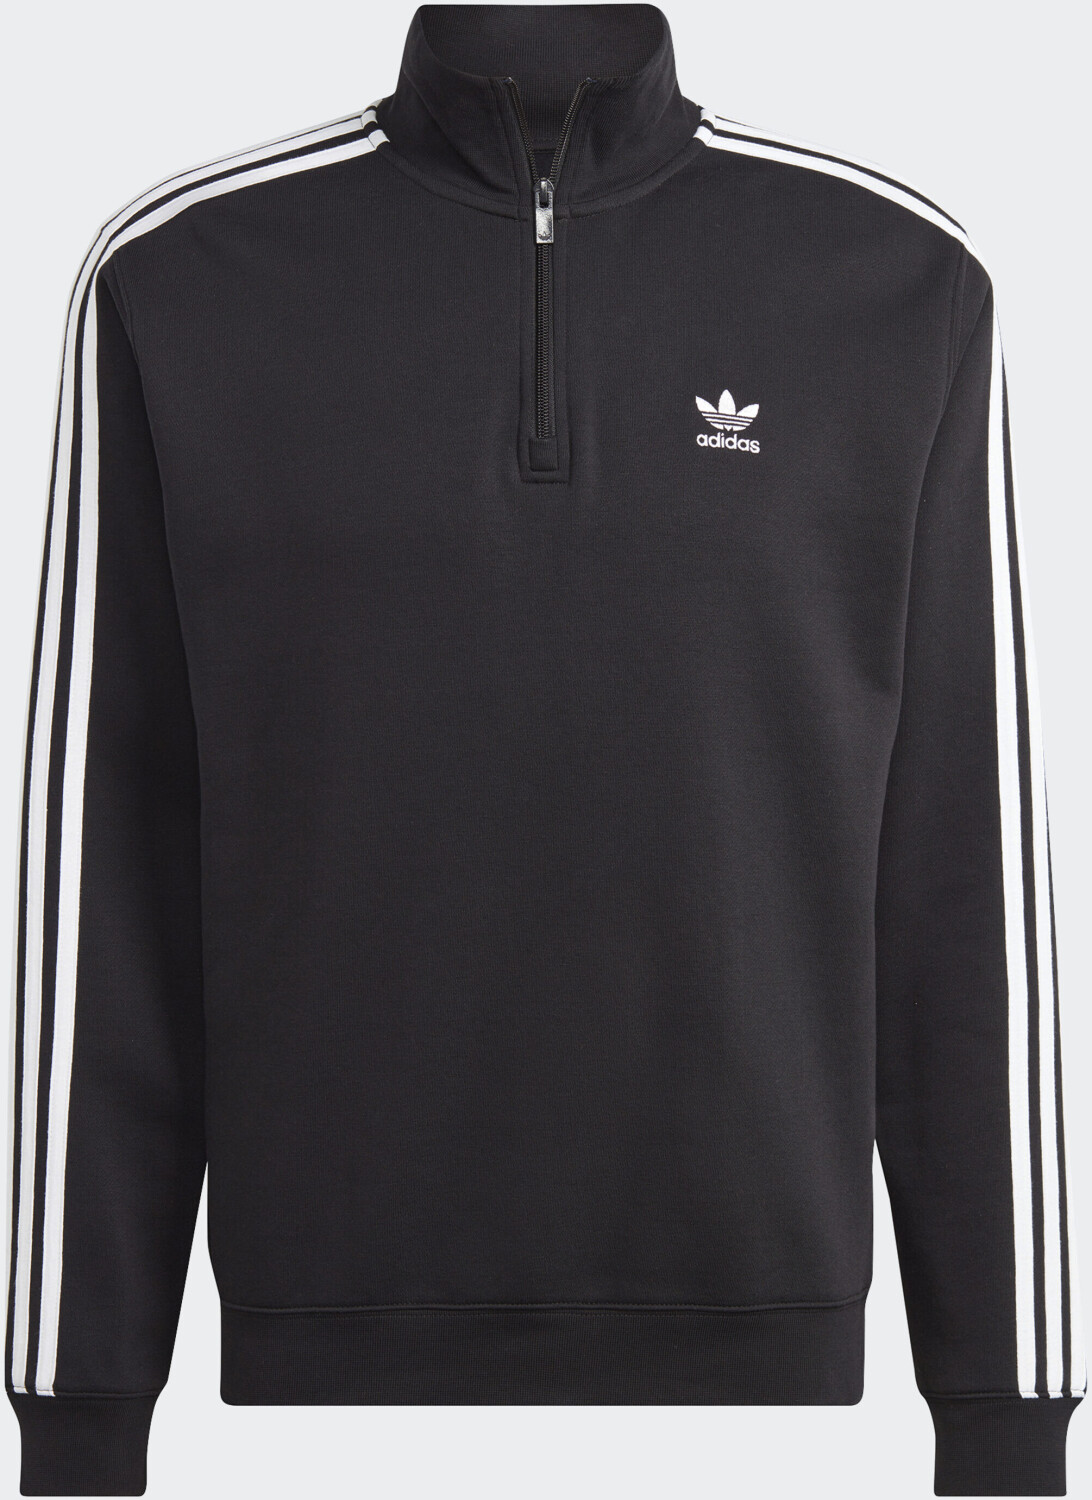 Adidas Man adicolor bei Half-Zip 58,95 (IL2503) Sweatshirt 3-Stripes € ab black/white Preisvergleich Classics 